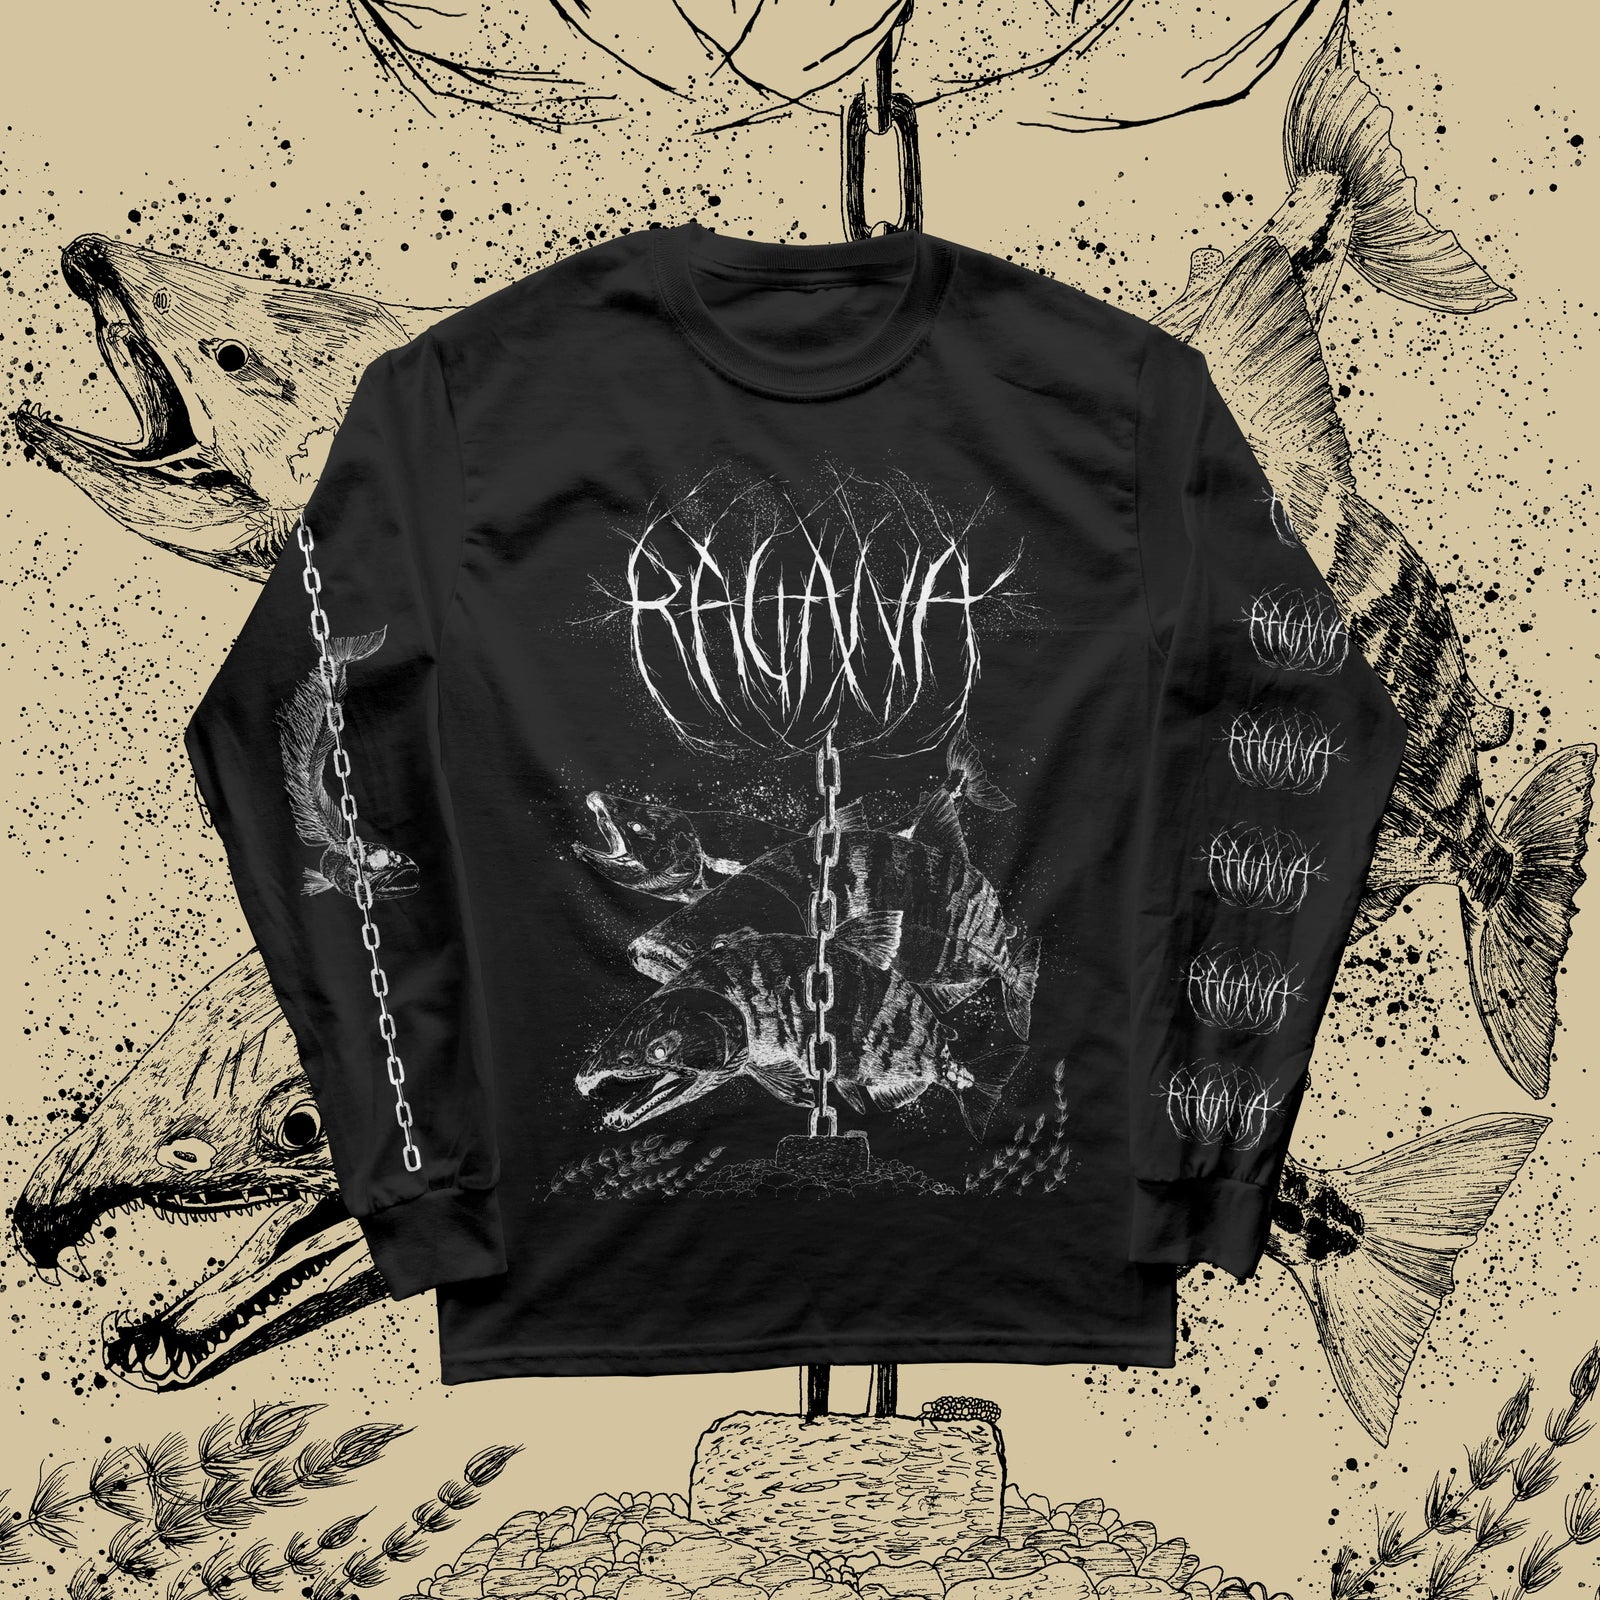 Ragana - Desolation's Flower